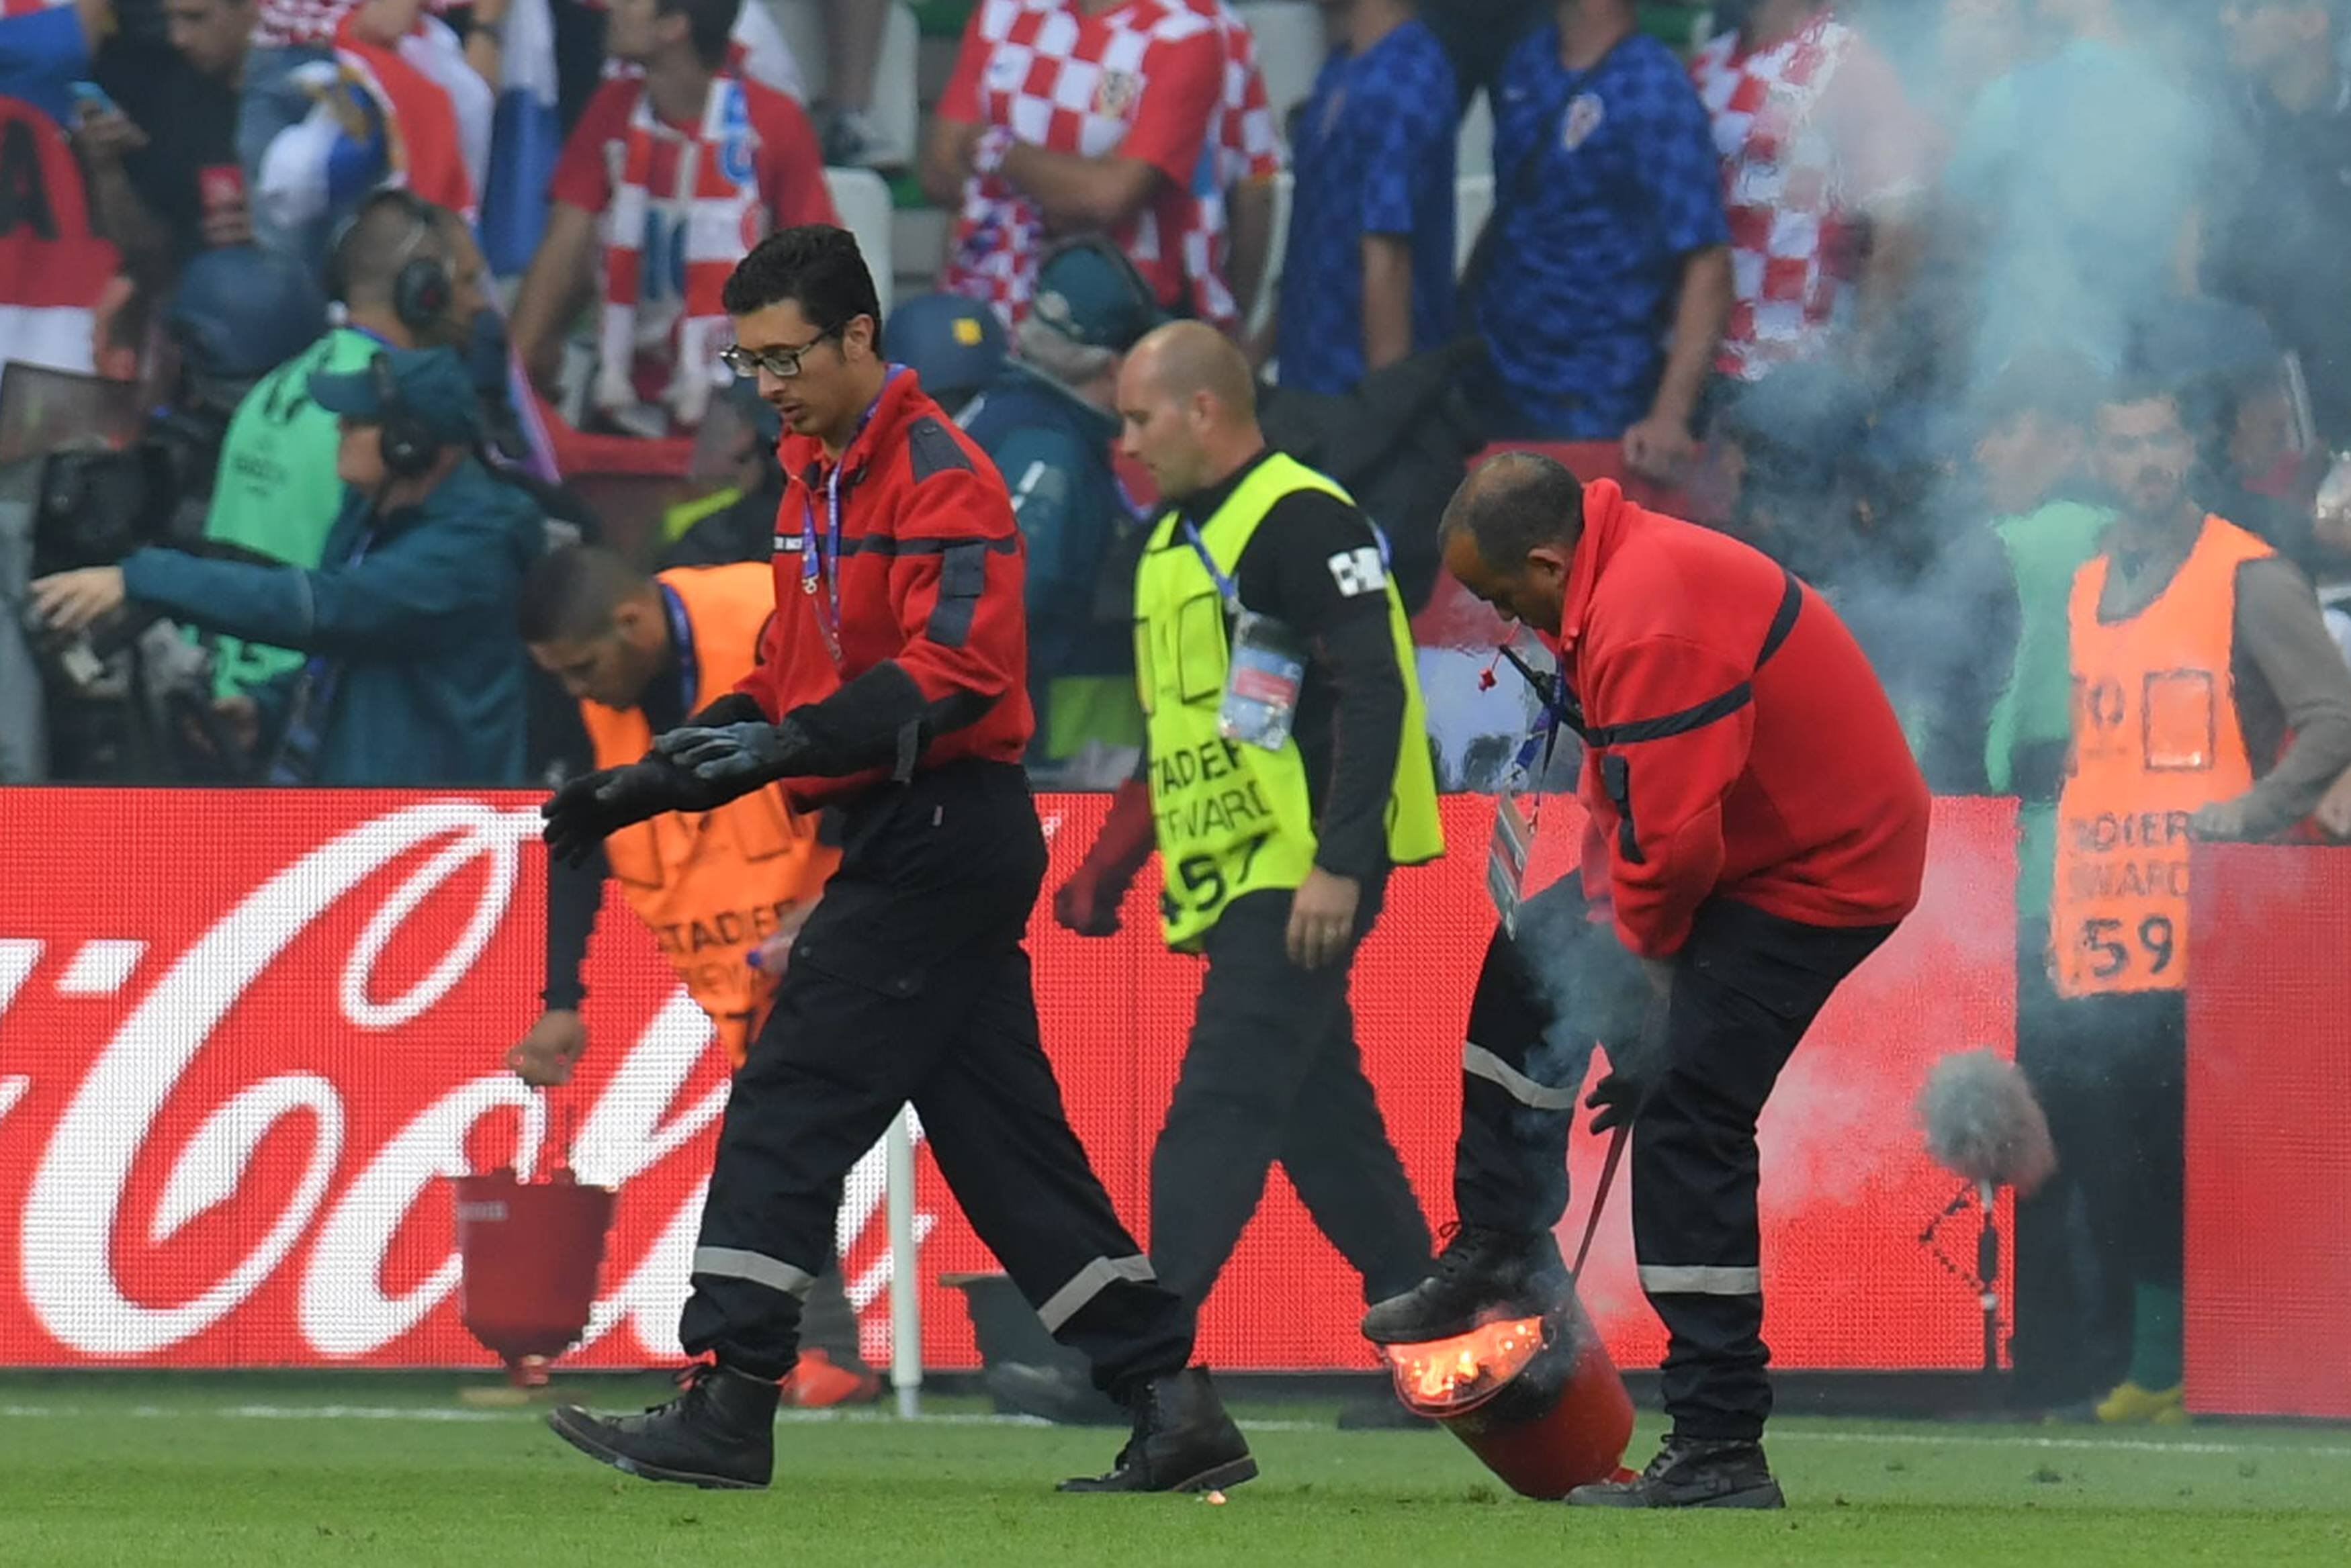 Файер-шоу и беспорядки на матче Чехия — Хорватия